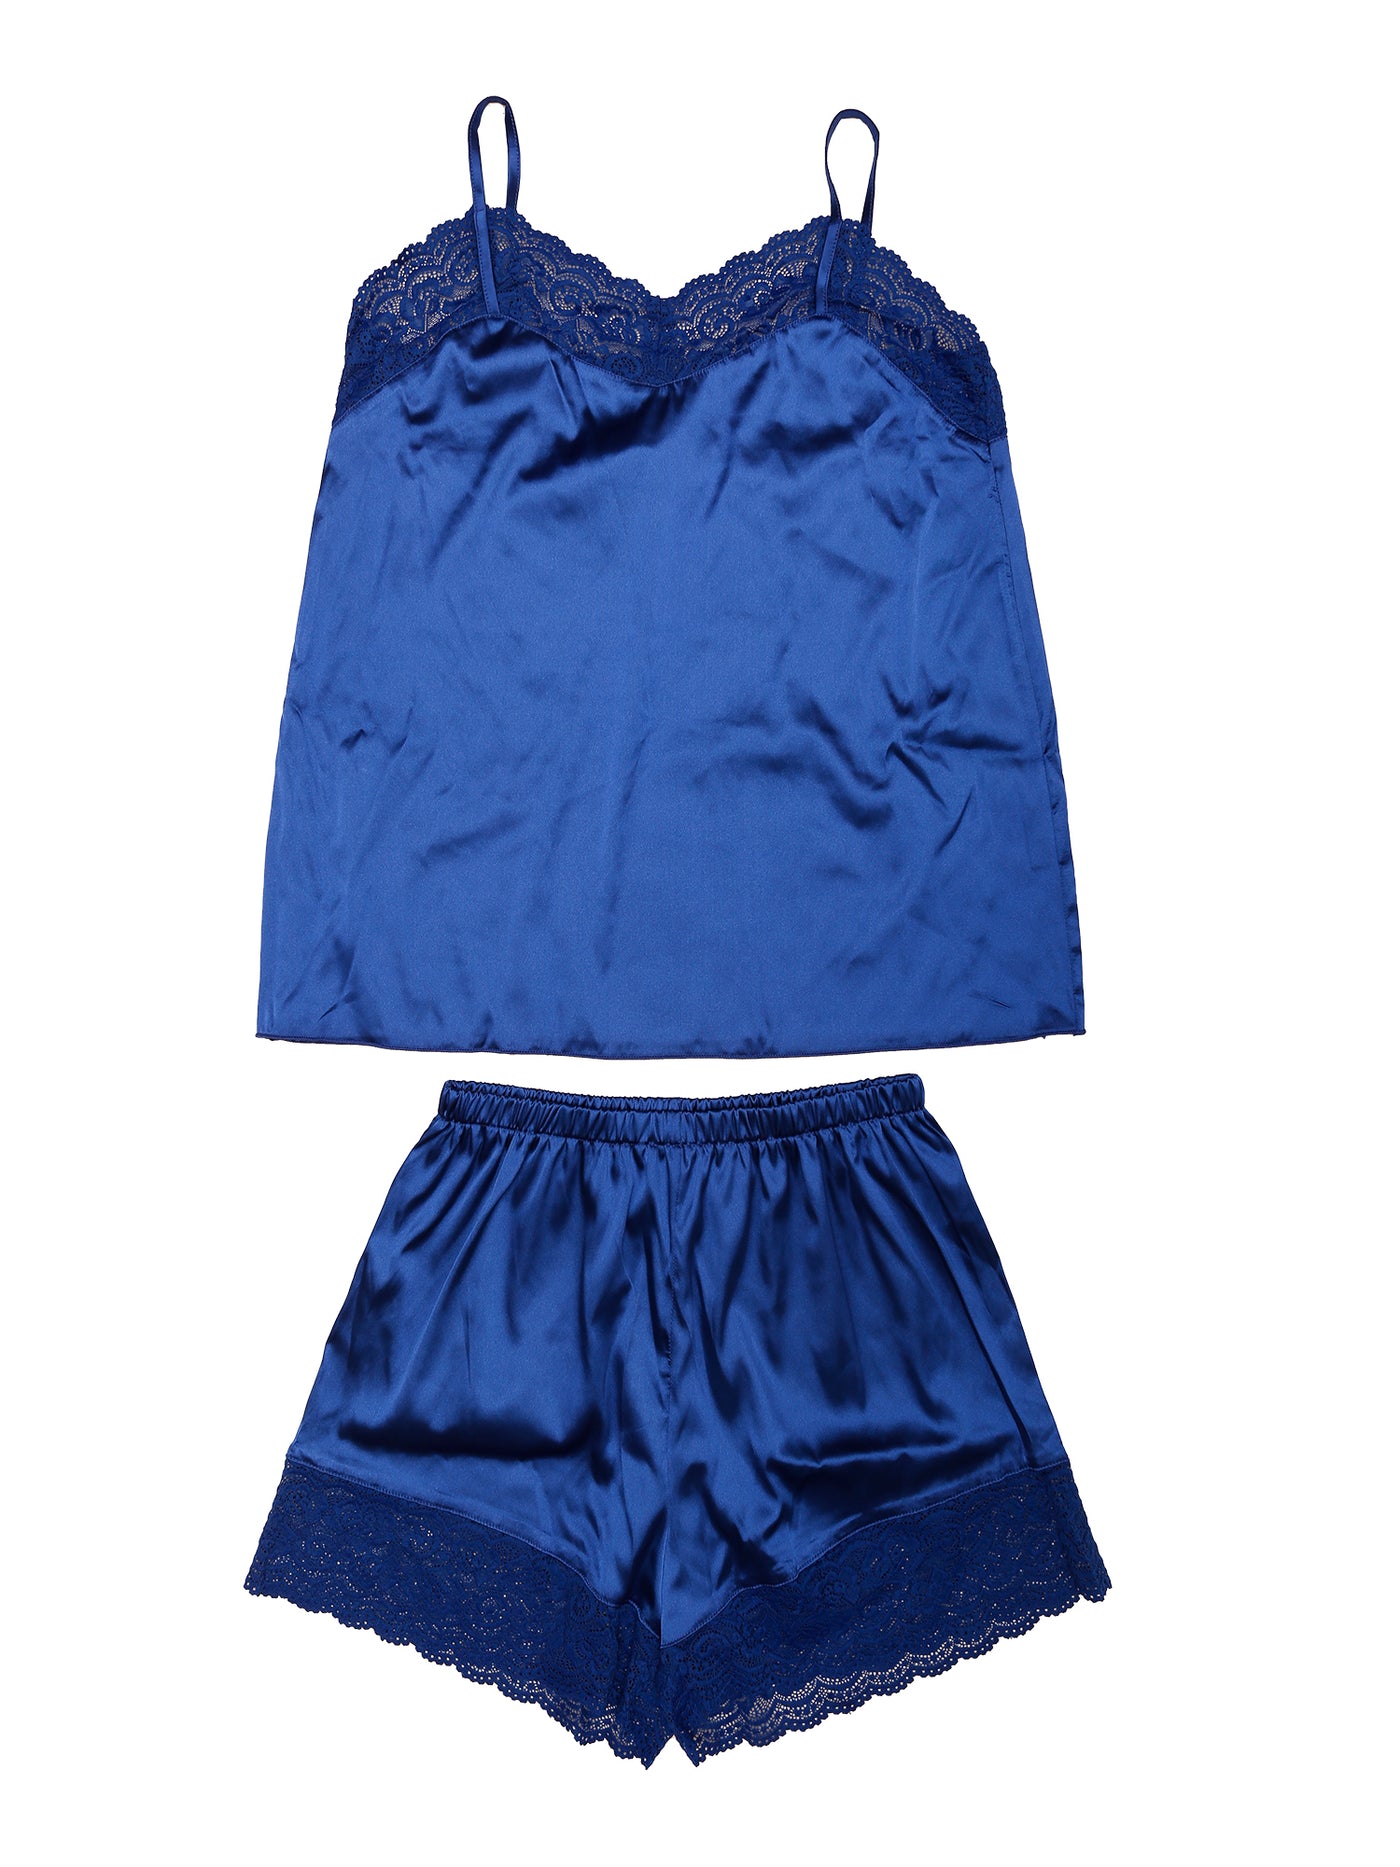 Allegra K Sleepwear Pajama Satin Lace Trim Cami Tops with Shorts Lounge Pj Set